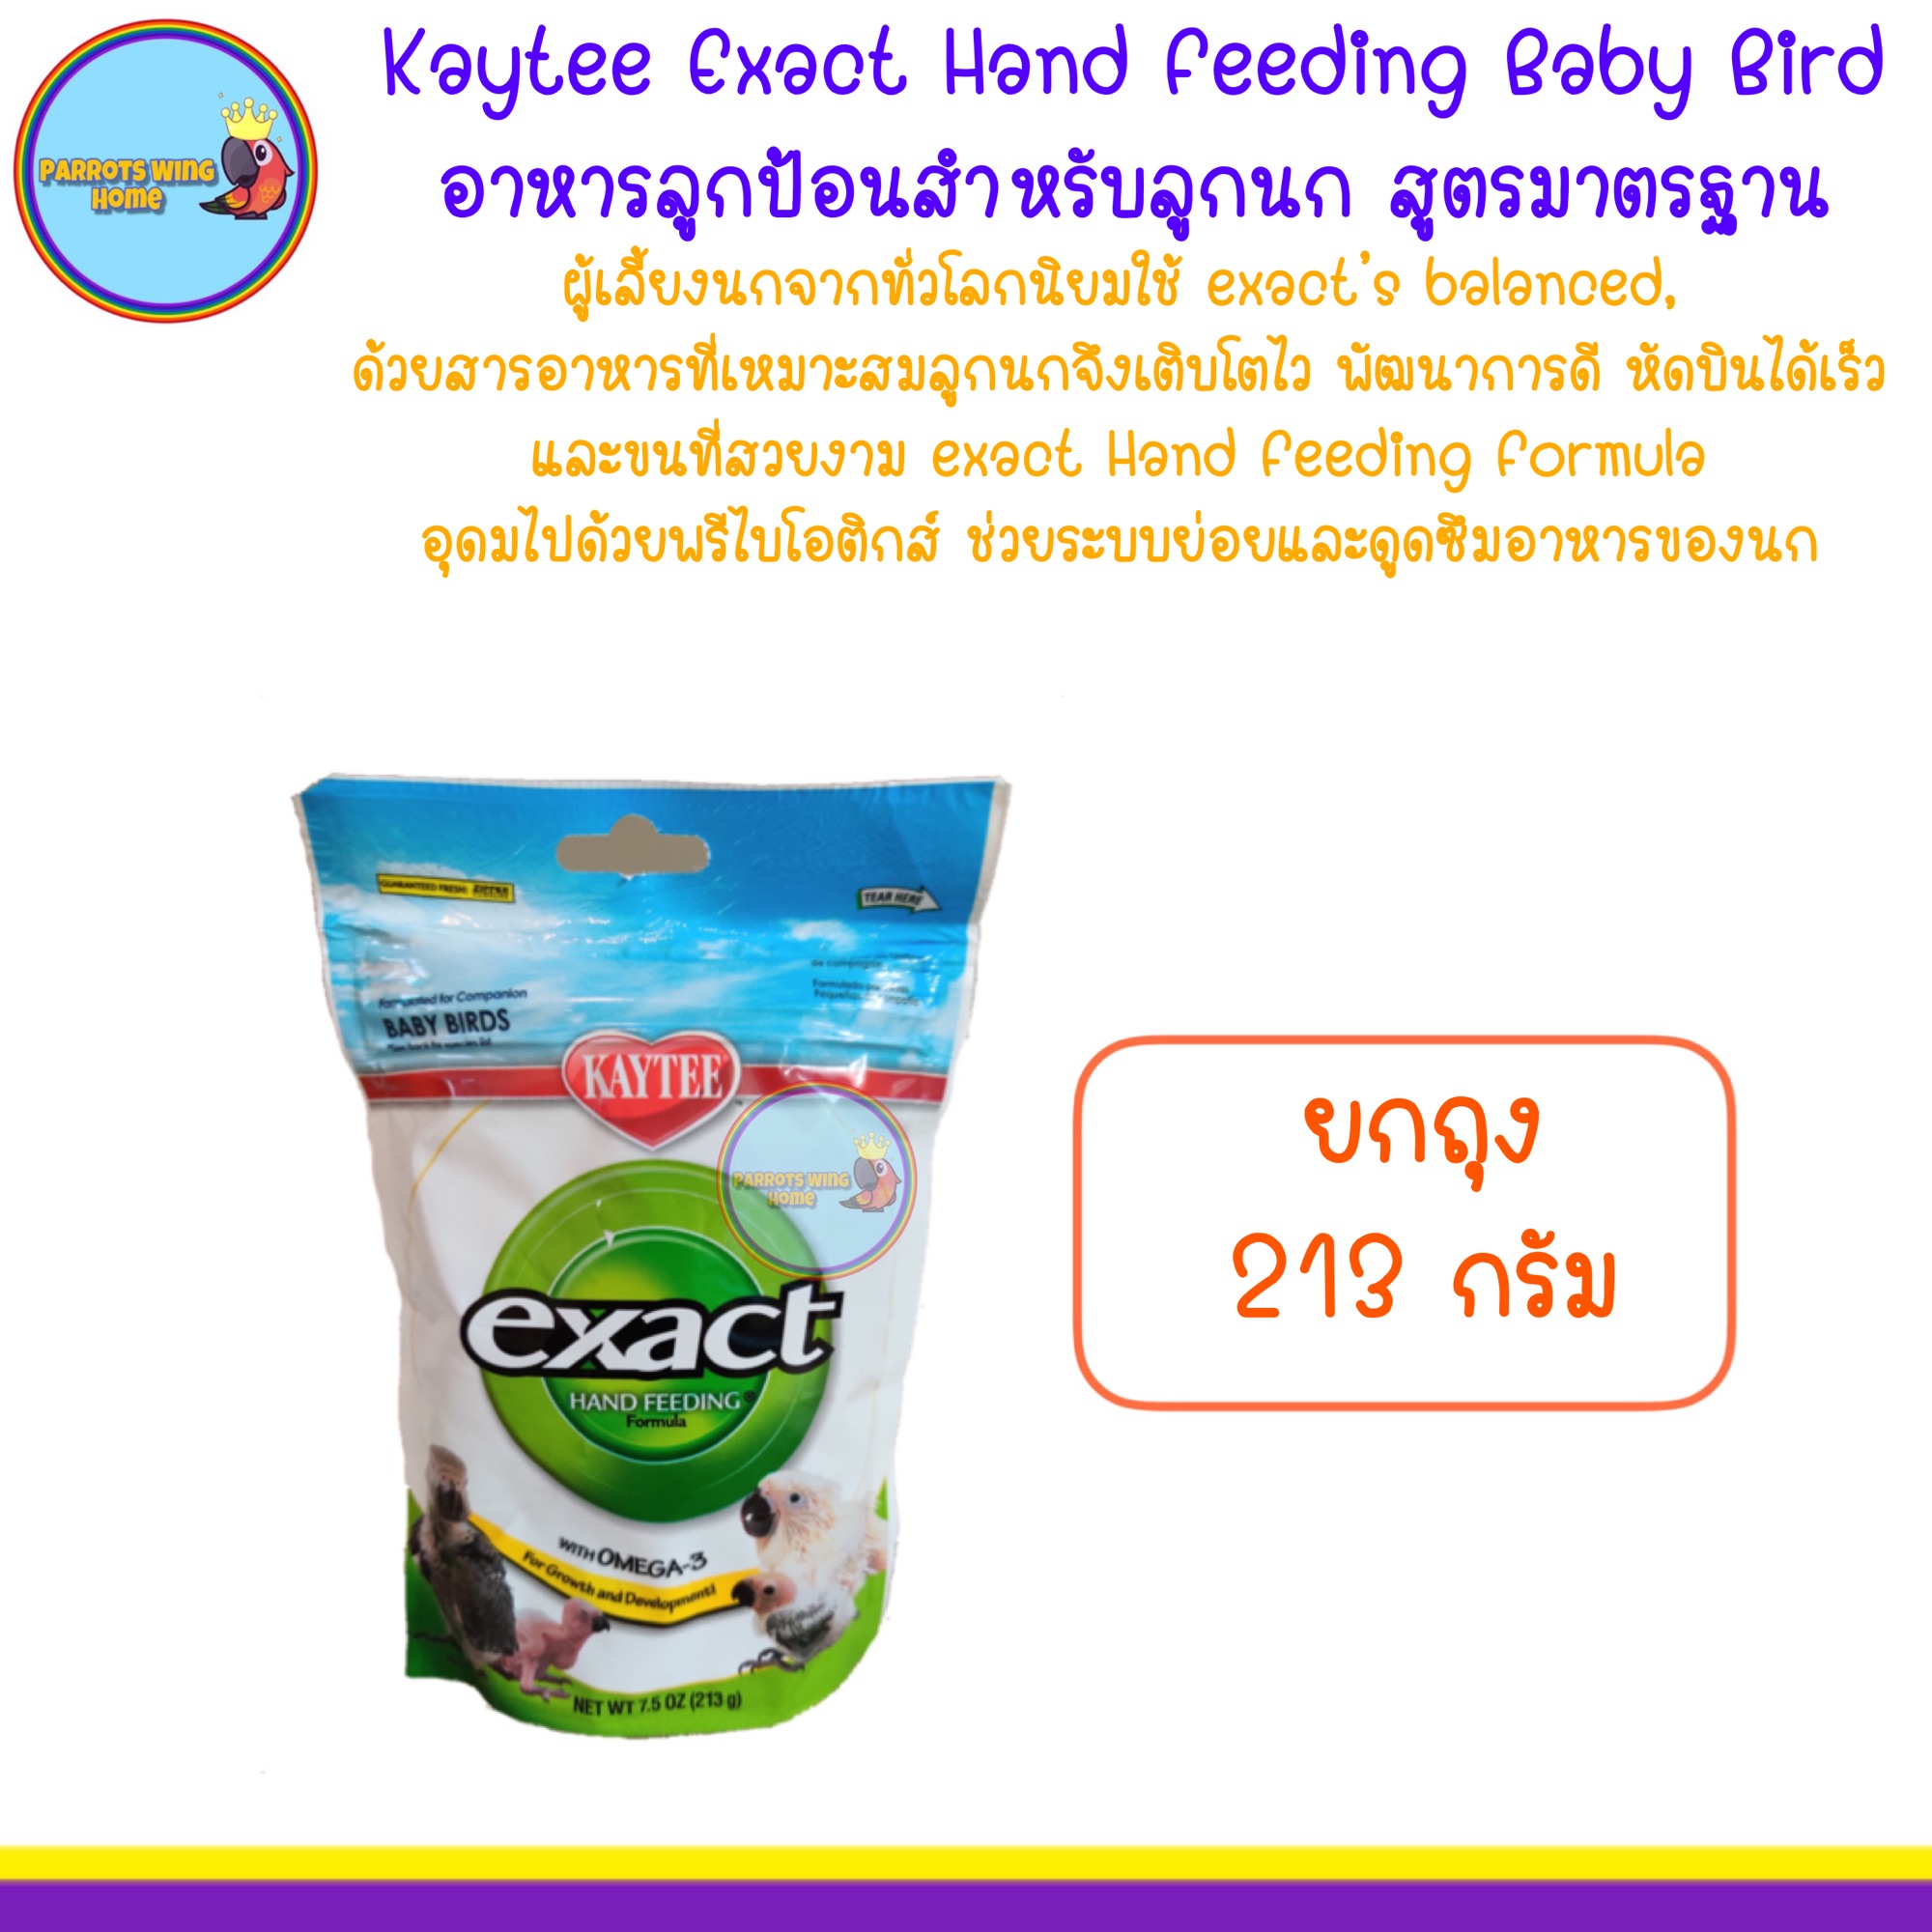 Kaytee Exact Hand Feeding Baby Bird  อาหารลูกป้อนสำหรับลูกนก สูตรมาตรฐาน ( 213กรัม )